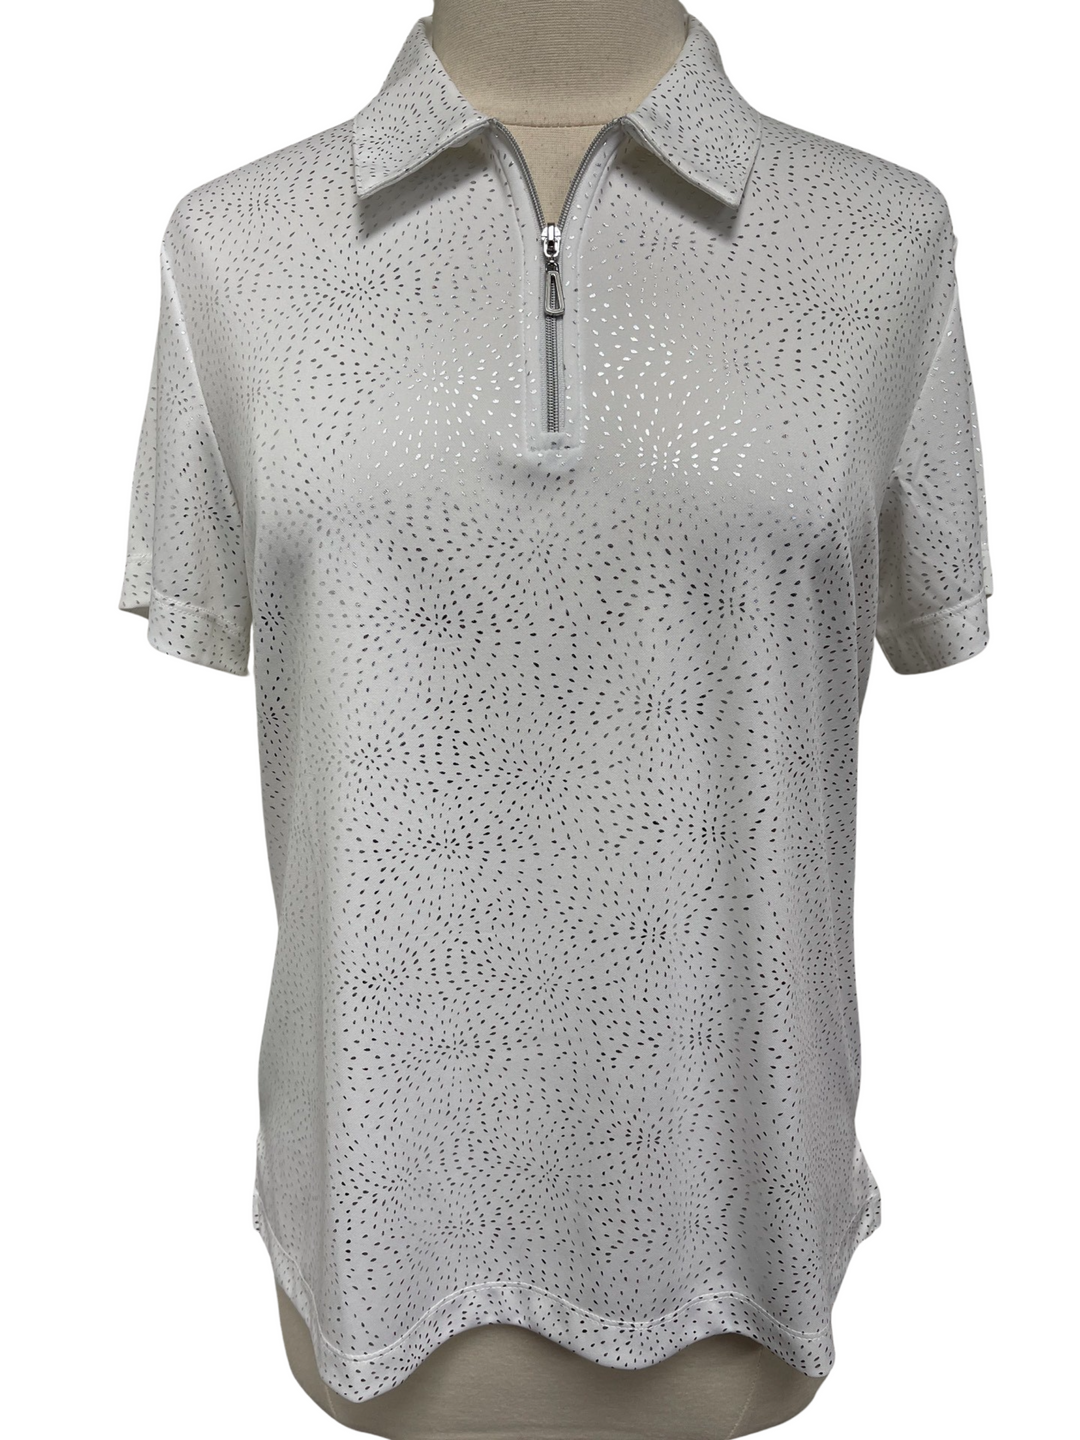 Monterey Club Short Sleeve Top - White/Silver - Size Large - Skorzie